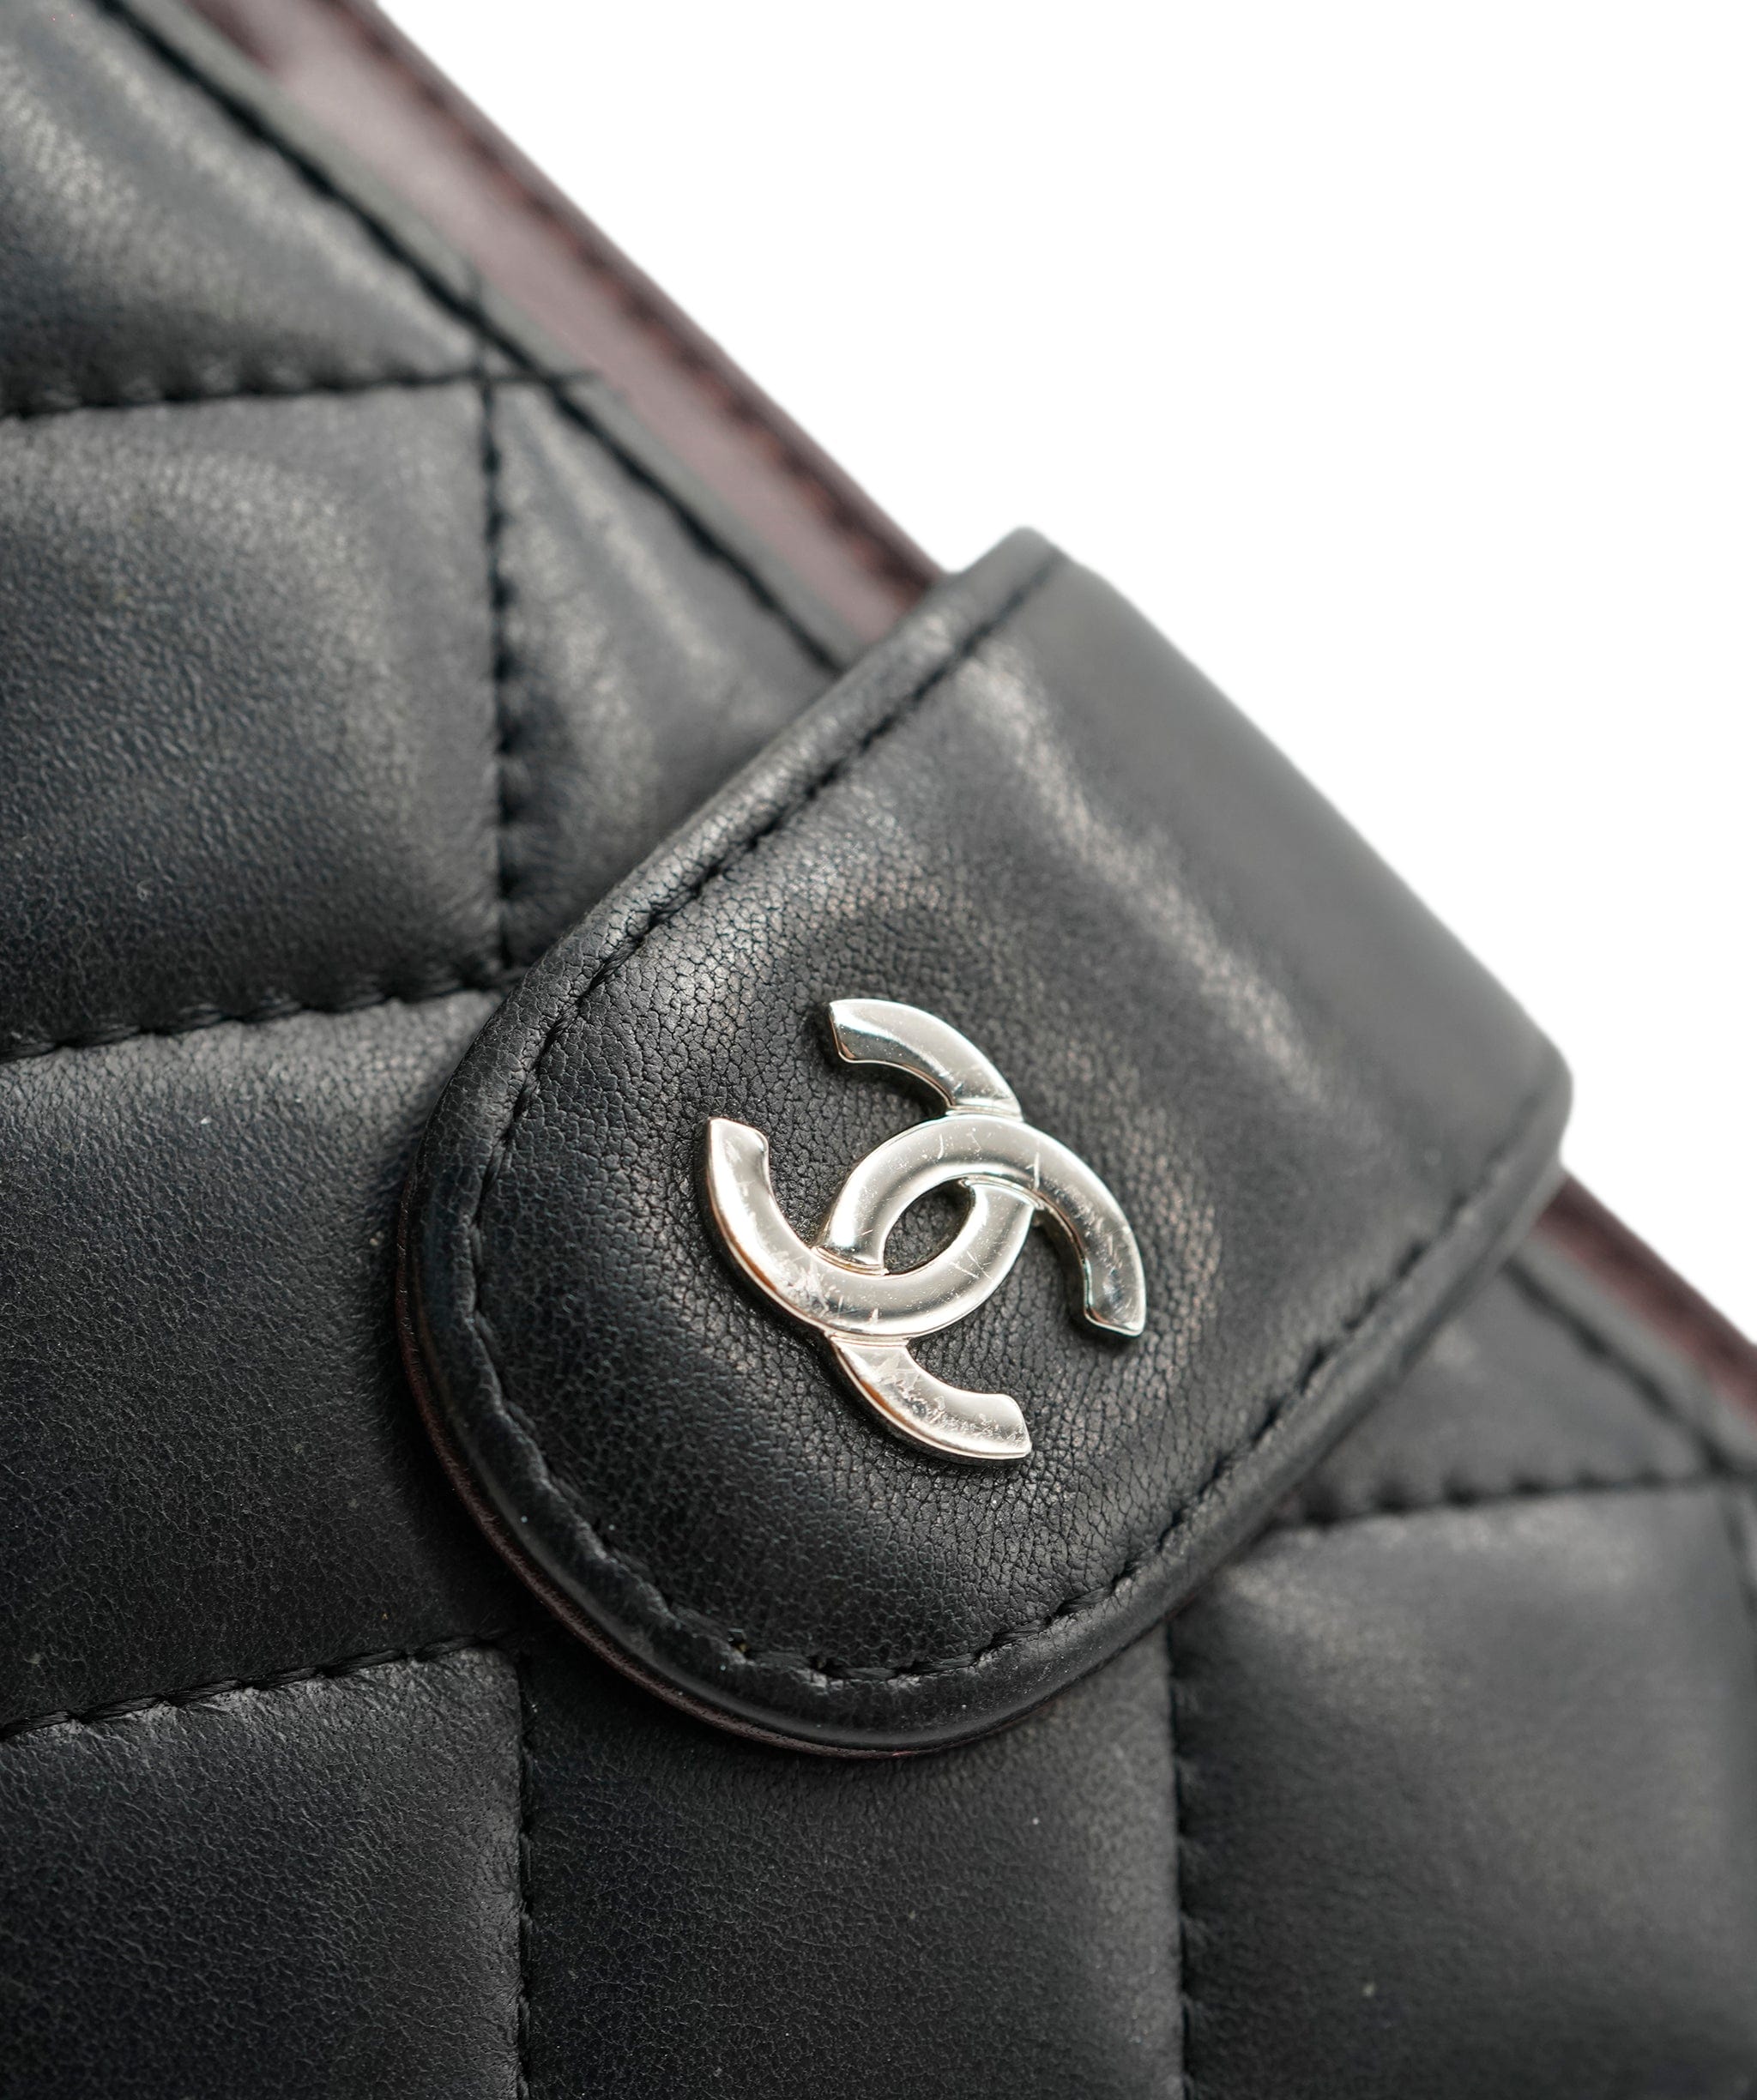 Chanel Chanel CC Black Wallet Compact  ALC1180